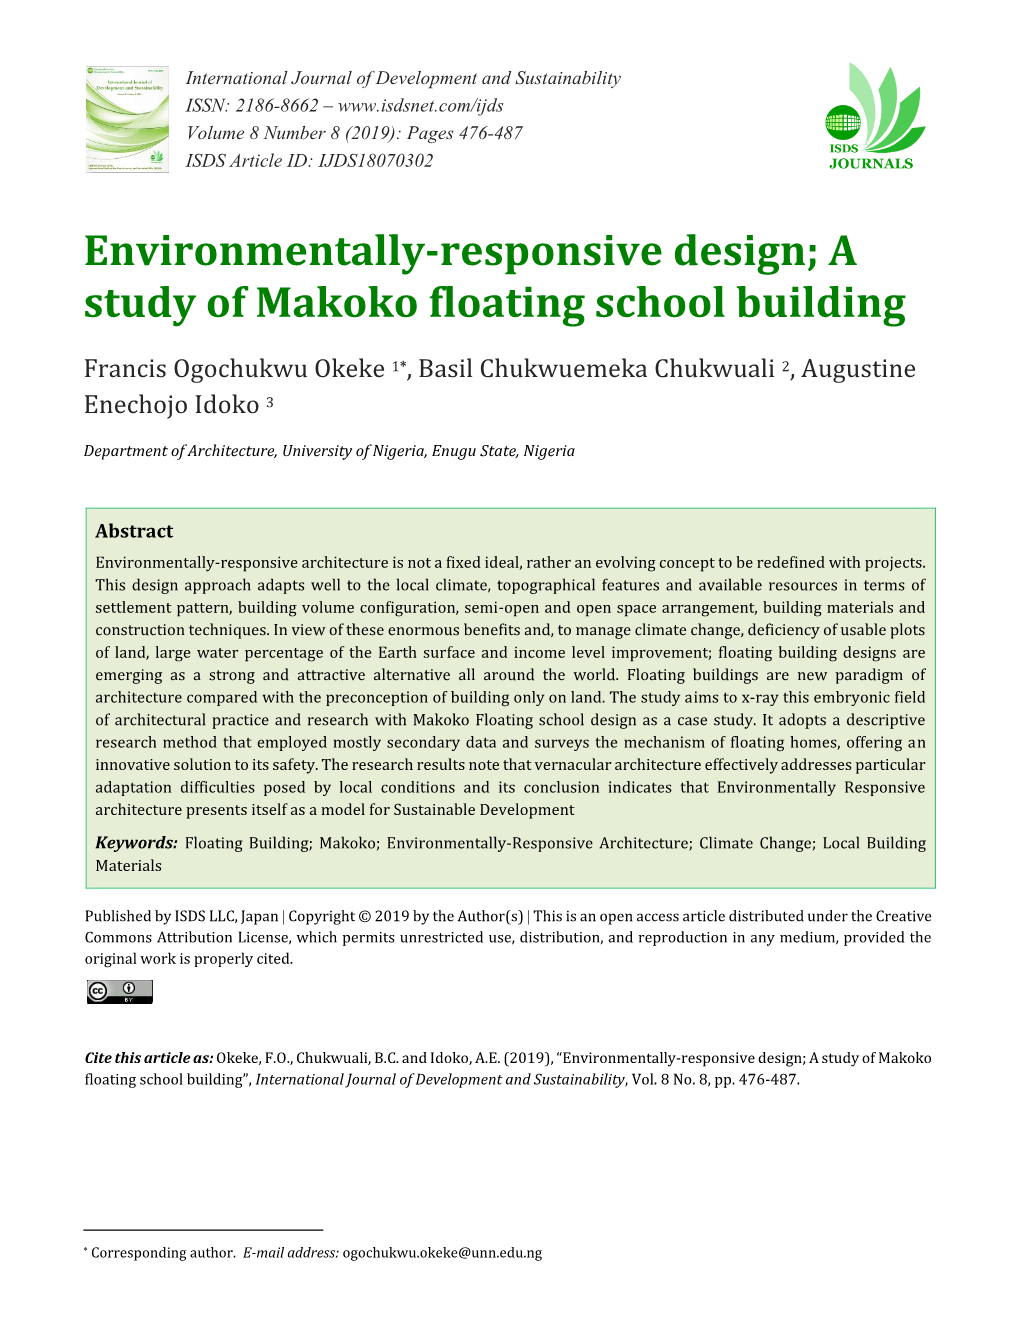 Environmentally-Responsive Design; a Study of Makoko Floating School Building